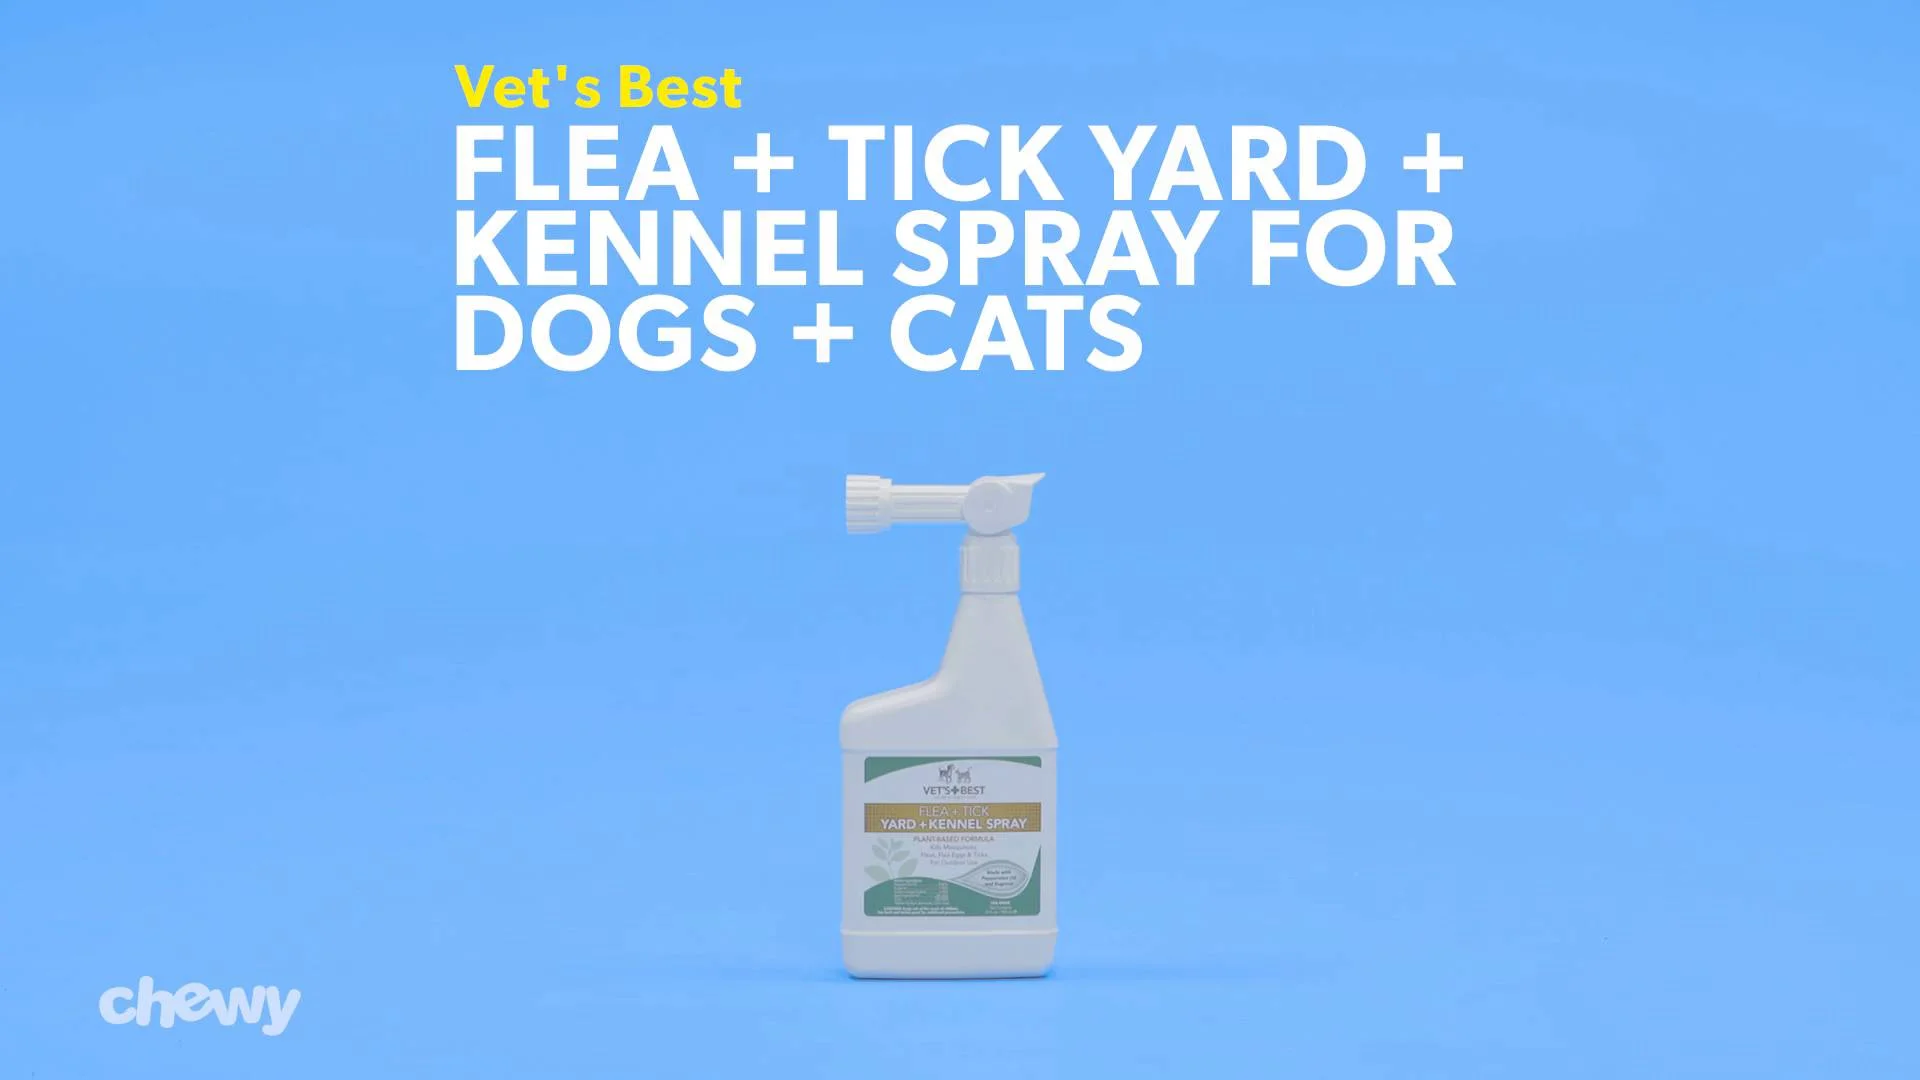 vet's best yard and kennel spray